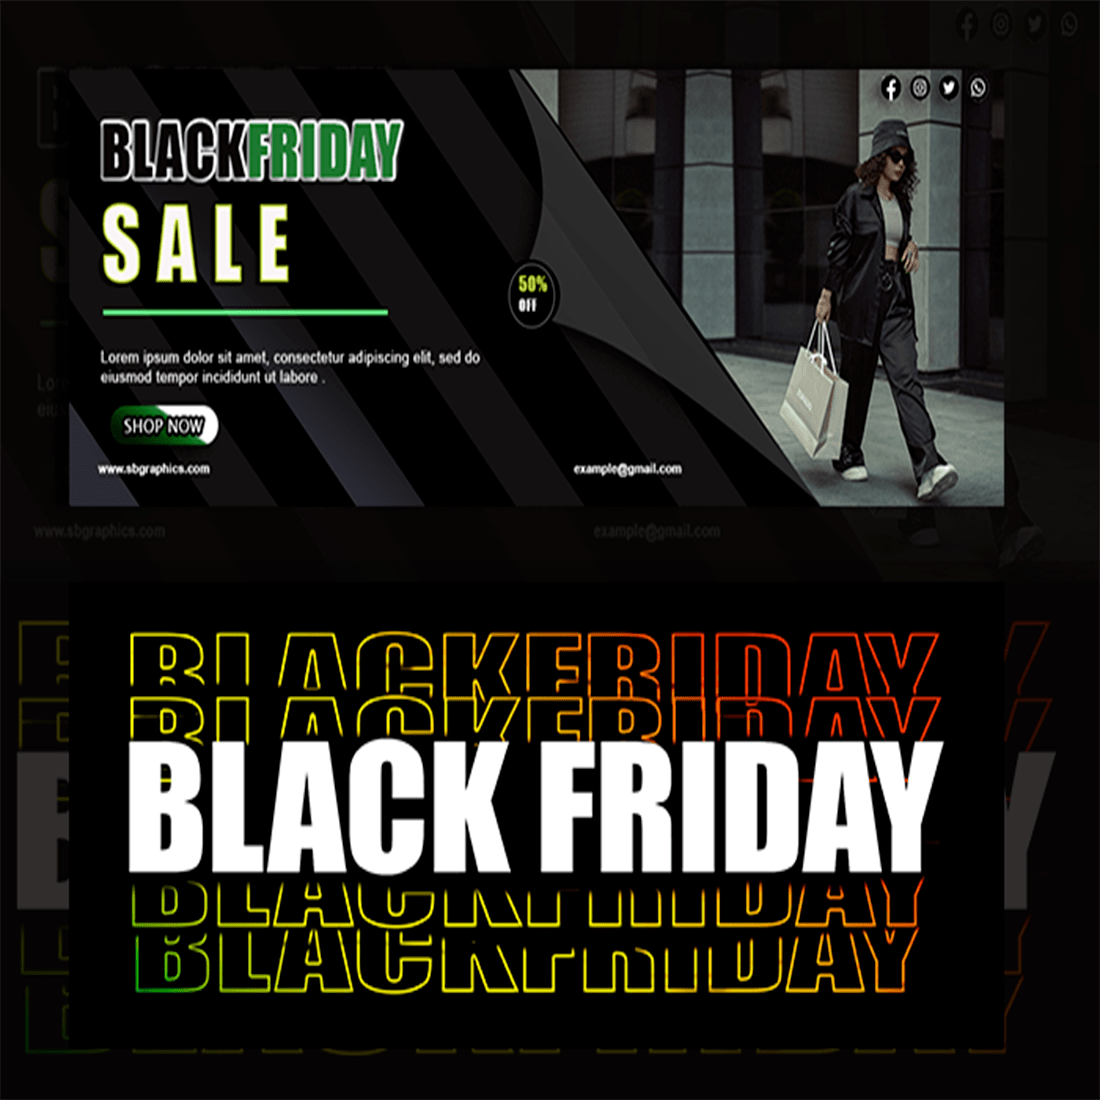 Sale Black Friday Facebook Cover Design cover image.